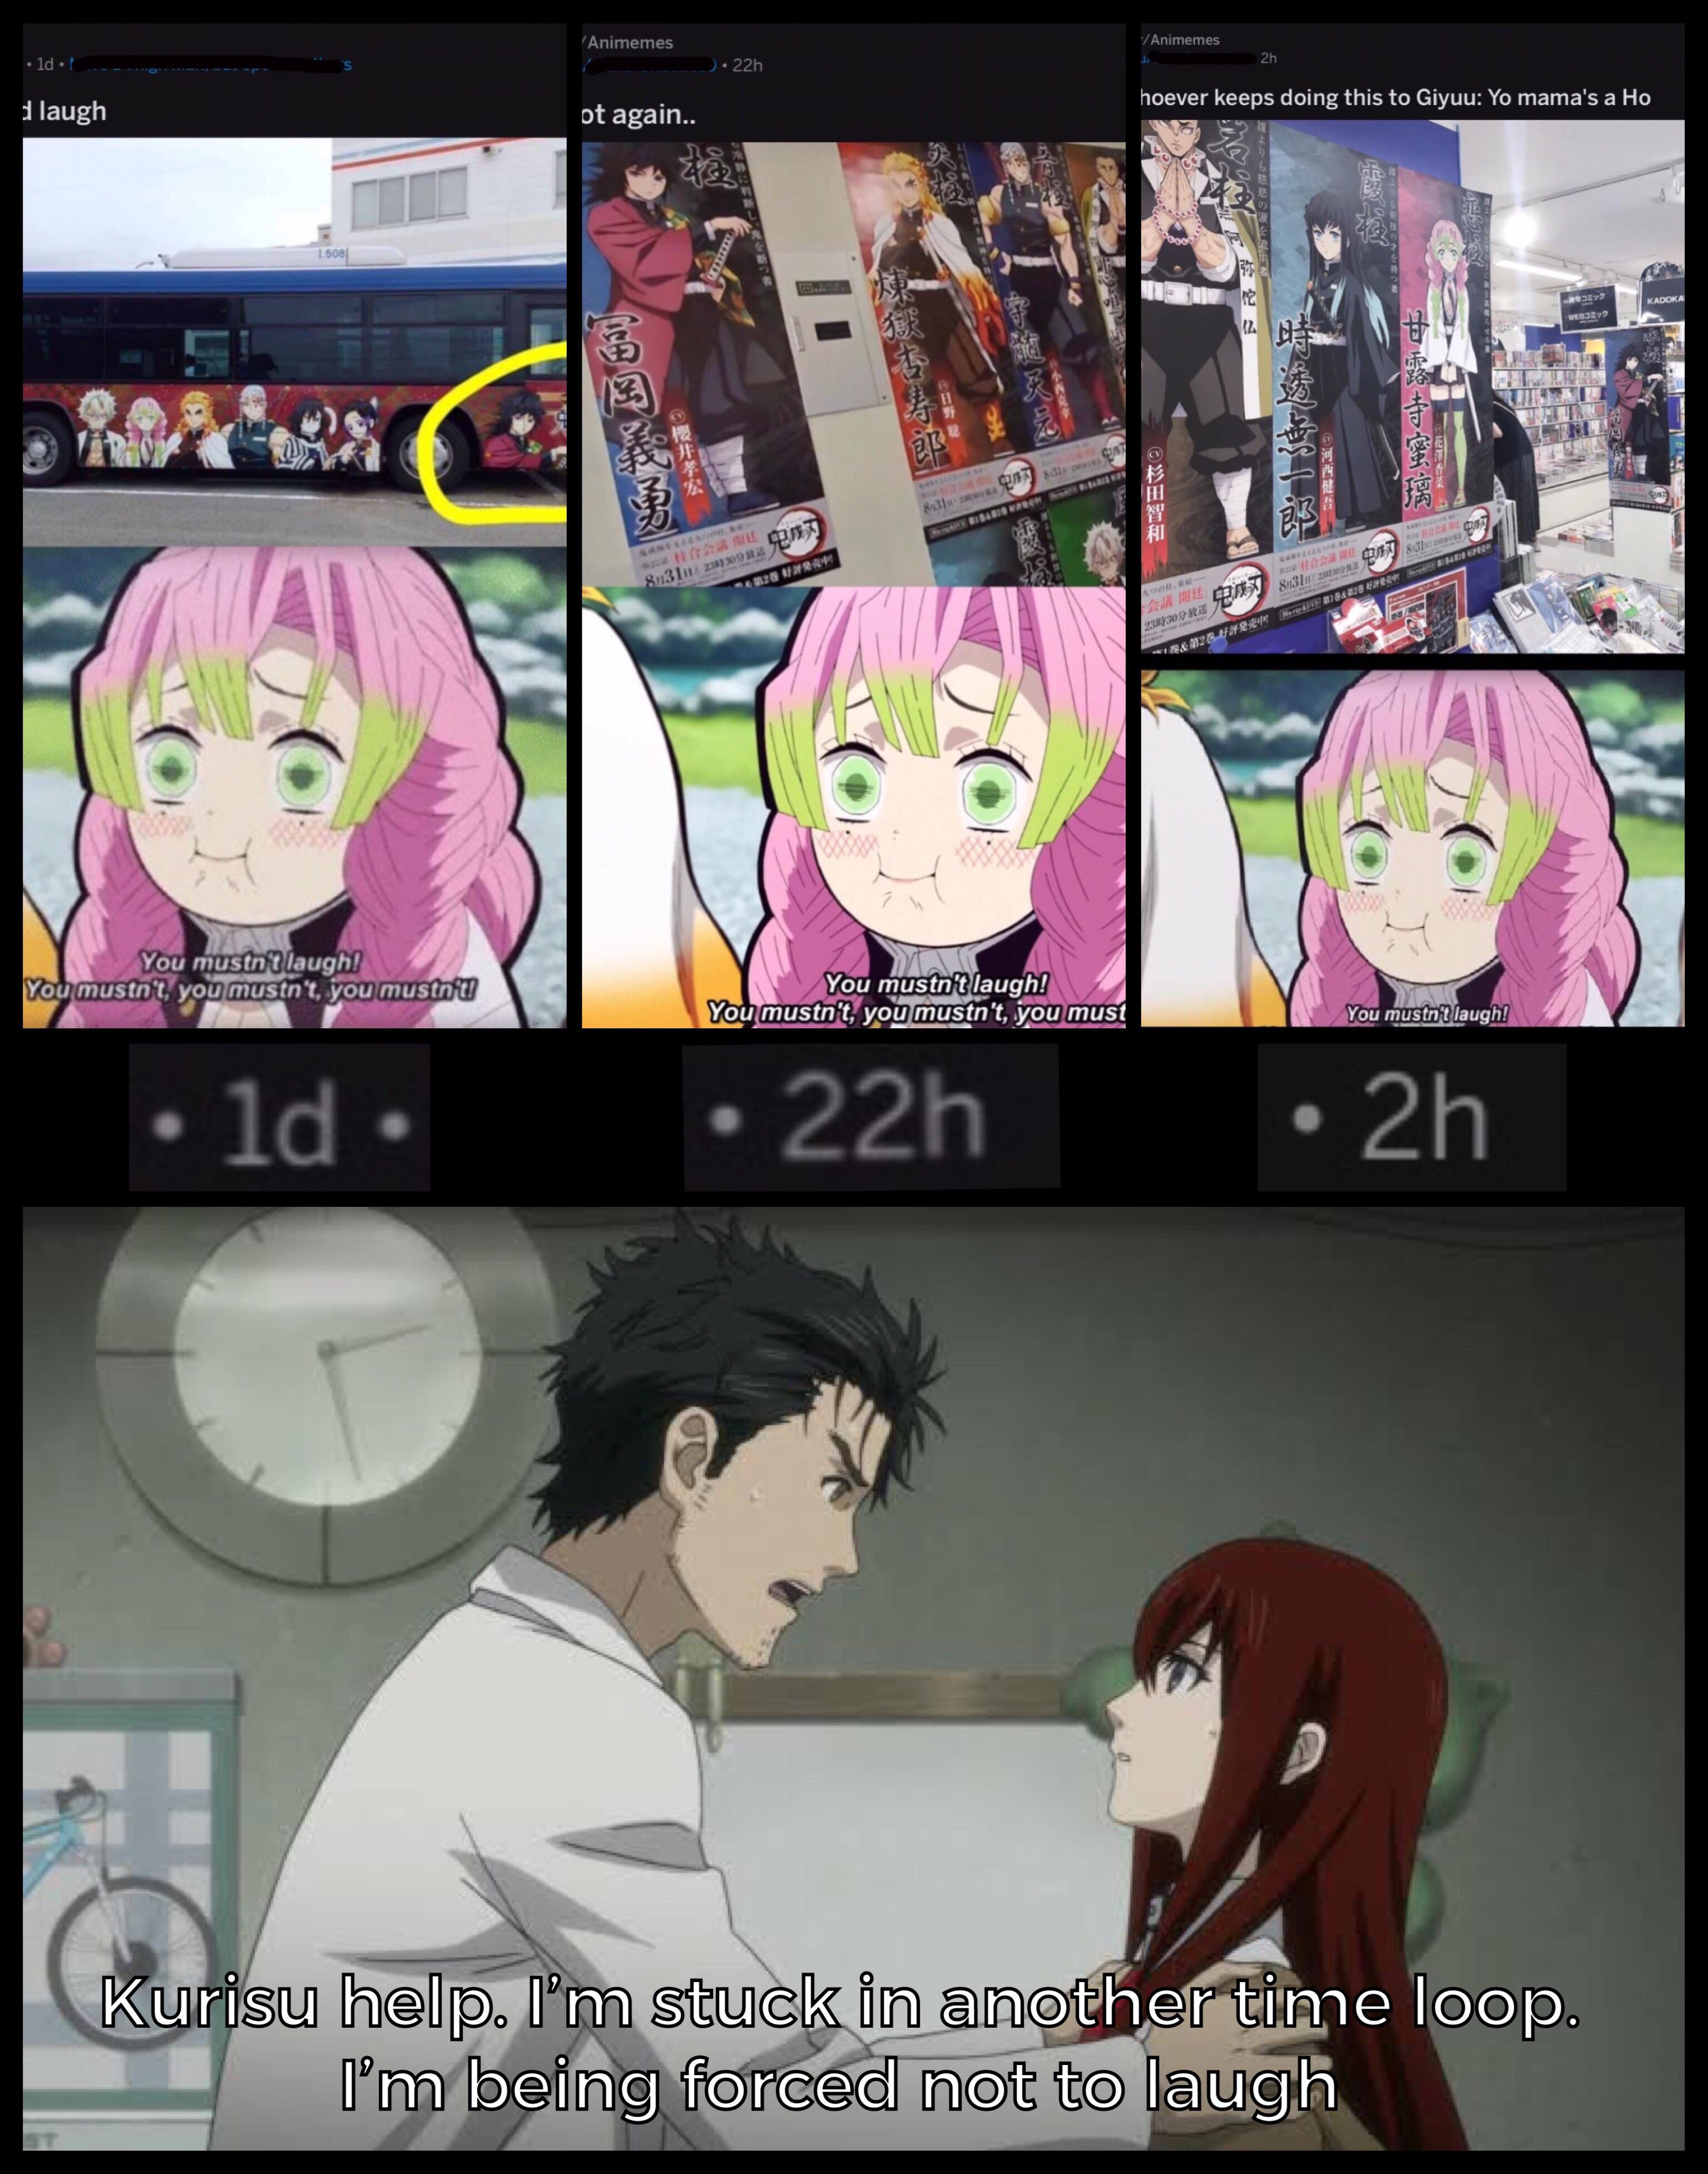 r/animemes on X: Just making eye contact #Animemes #memes #anime    / X